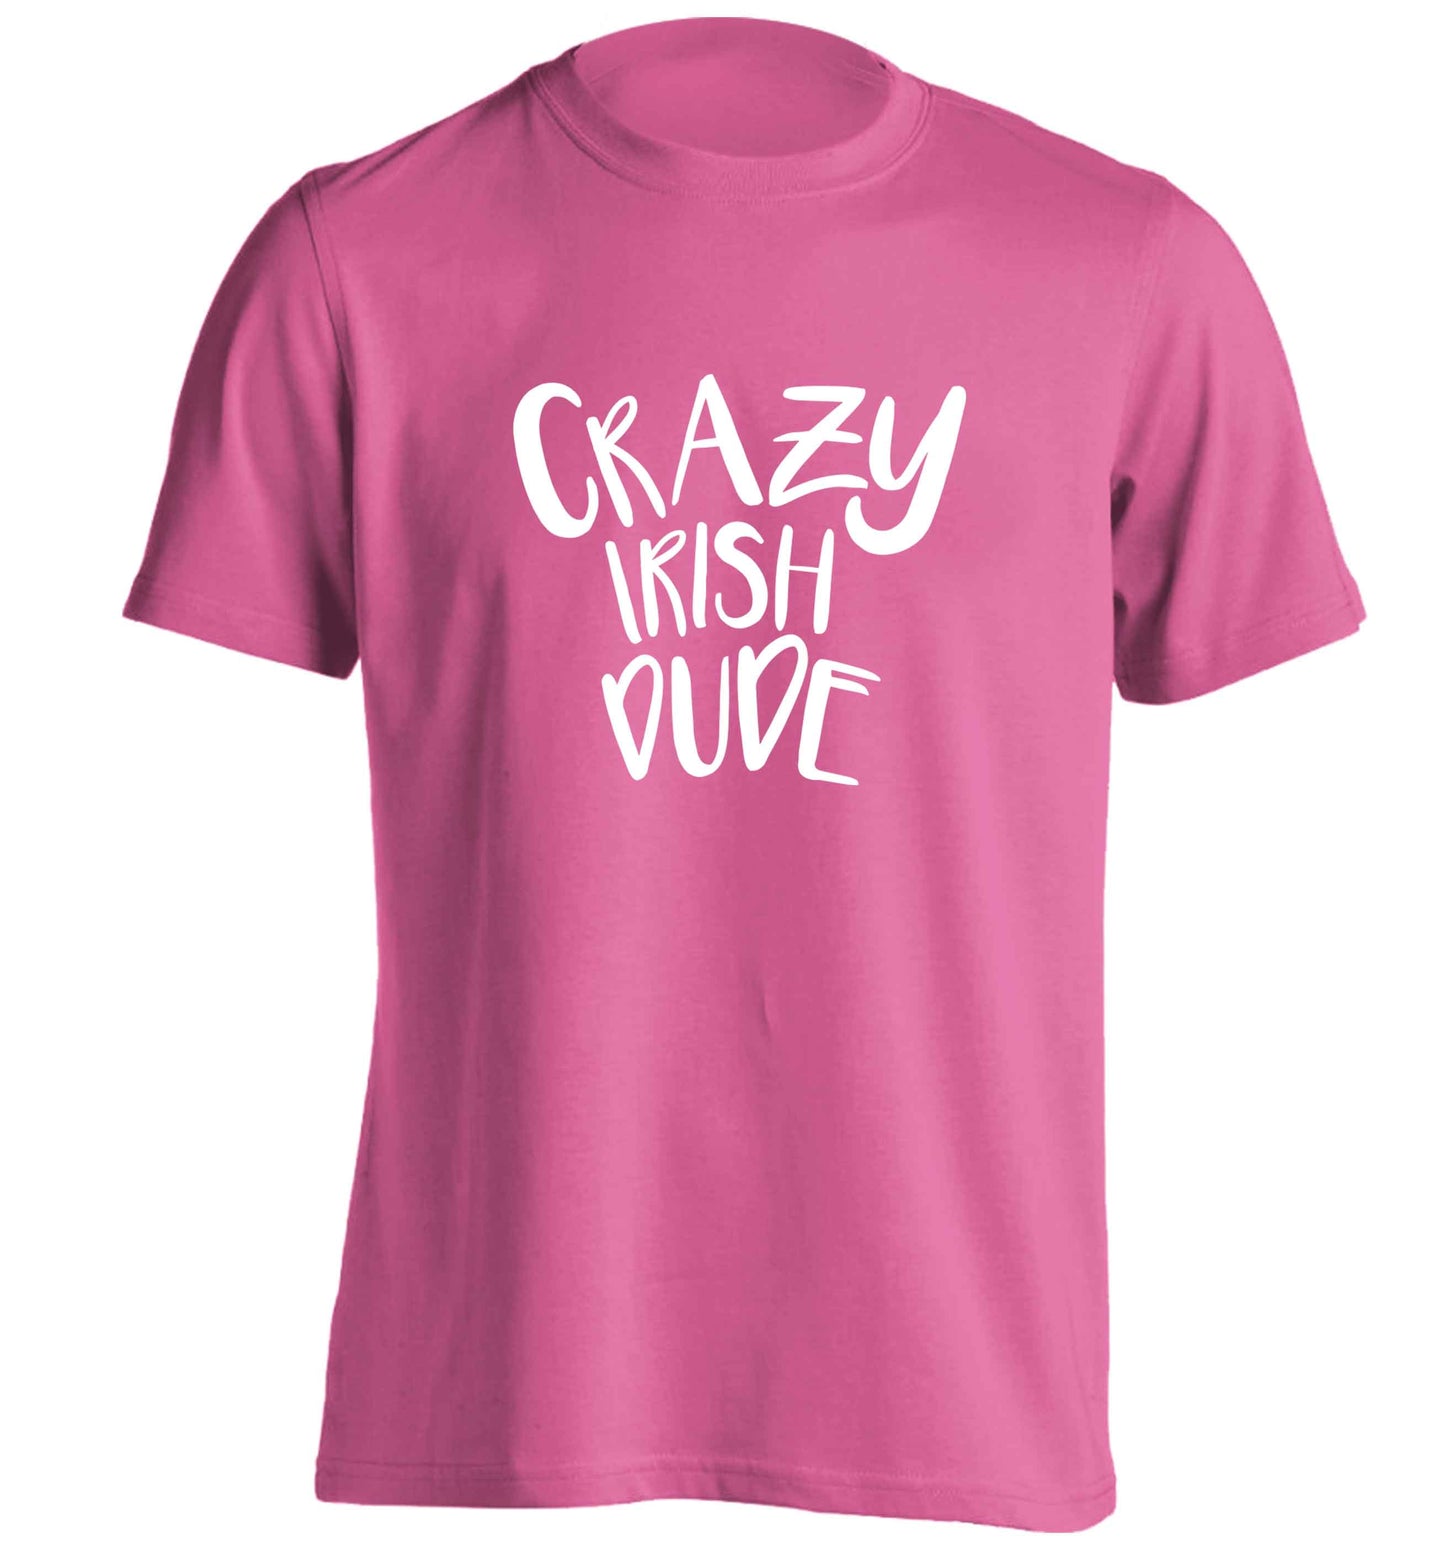 Crazy Irish dude adults unisex pink Tshirt 2XL